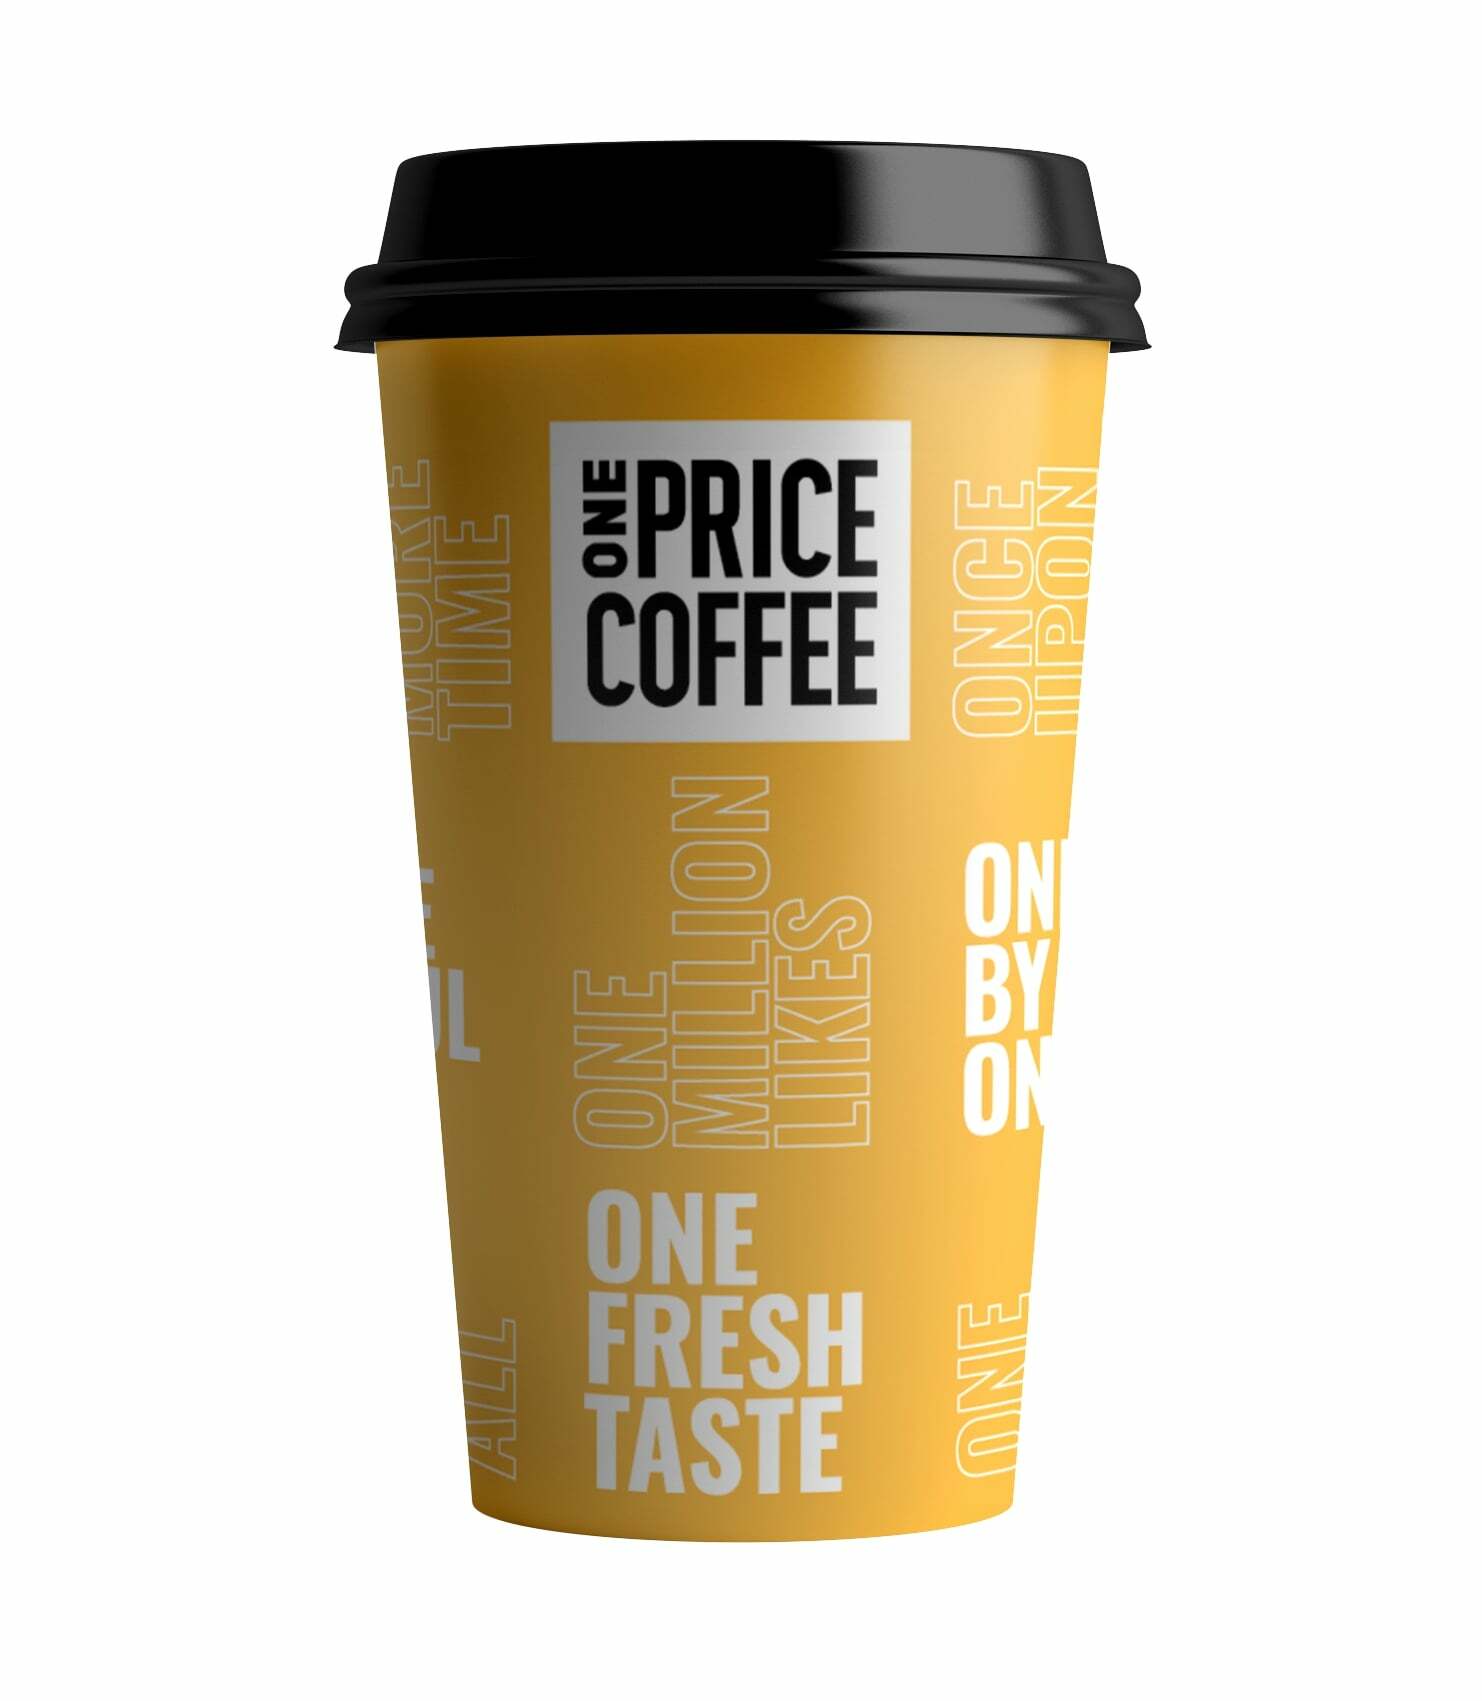 One coffee франшиза. Кофейня one Price Coffee. Price Coffee стаканчики. One Price Coffee стакан. One Price Coffee Мурманск.